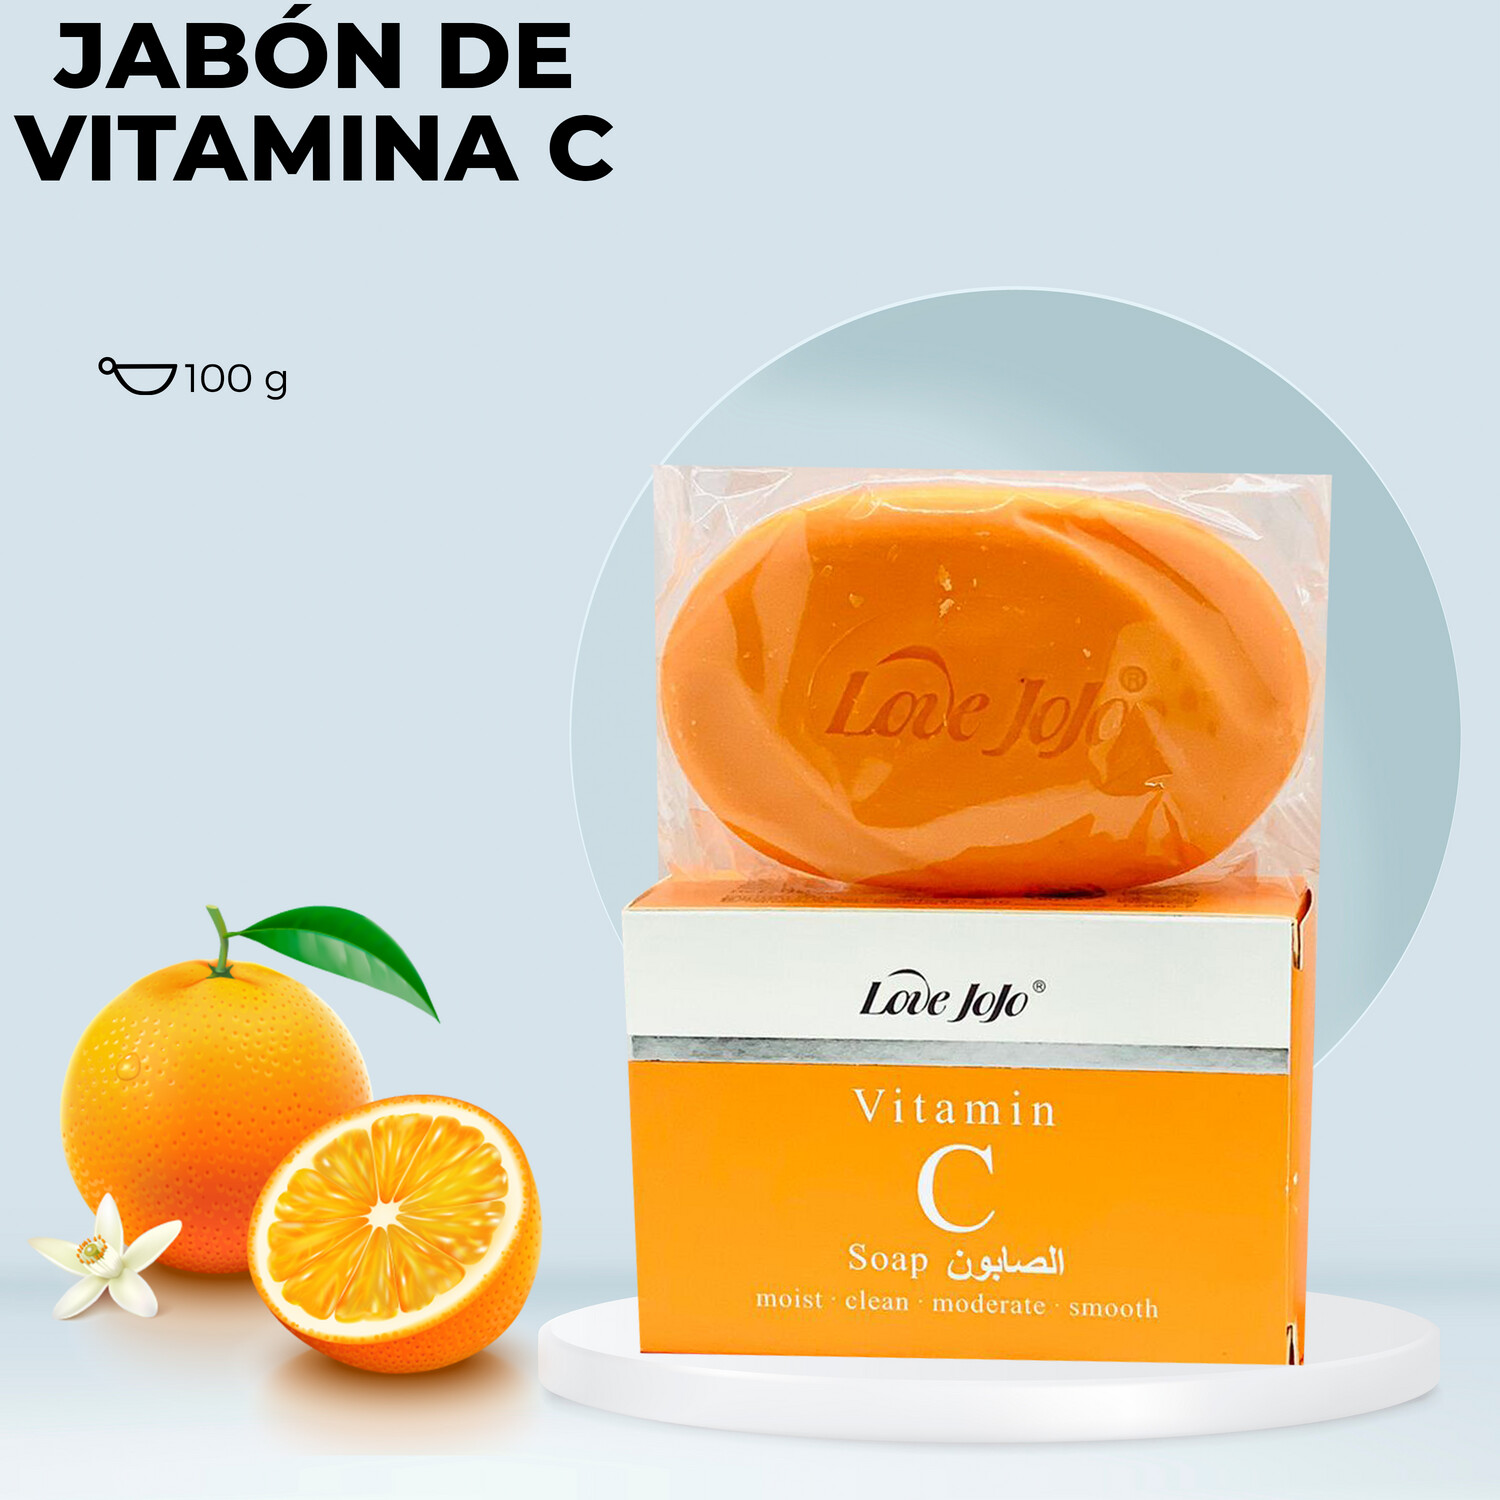 Jabón de vitamina C